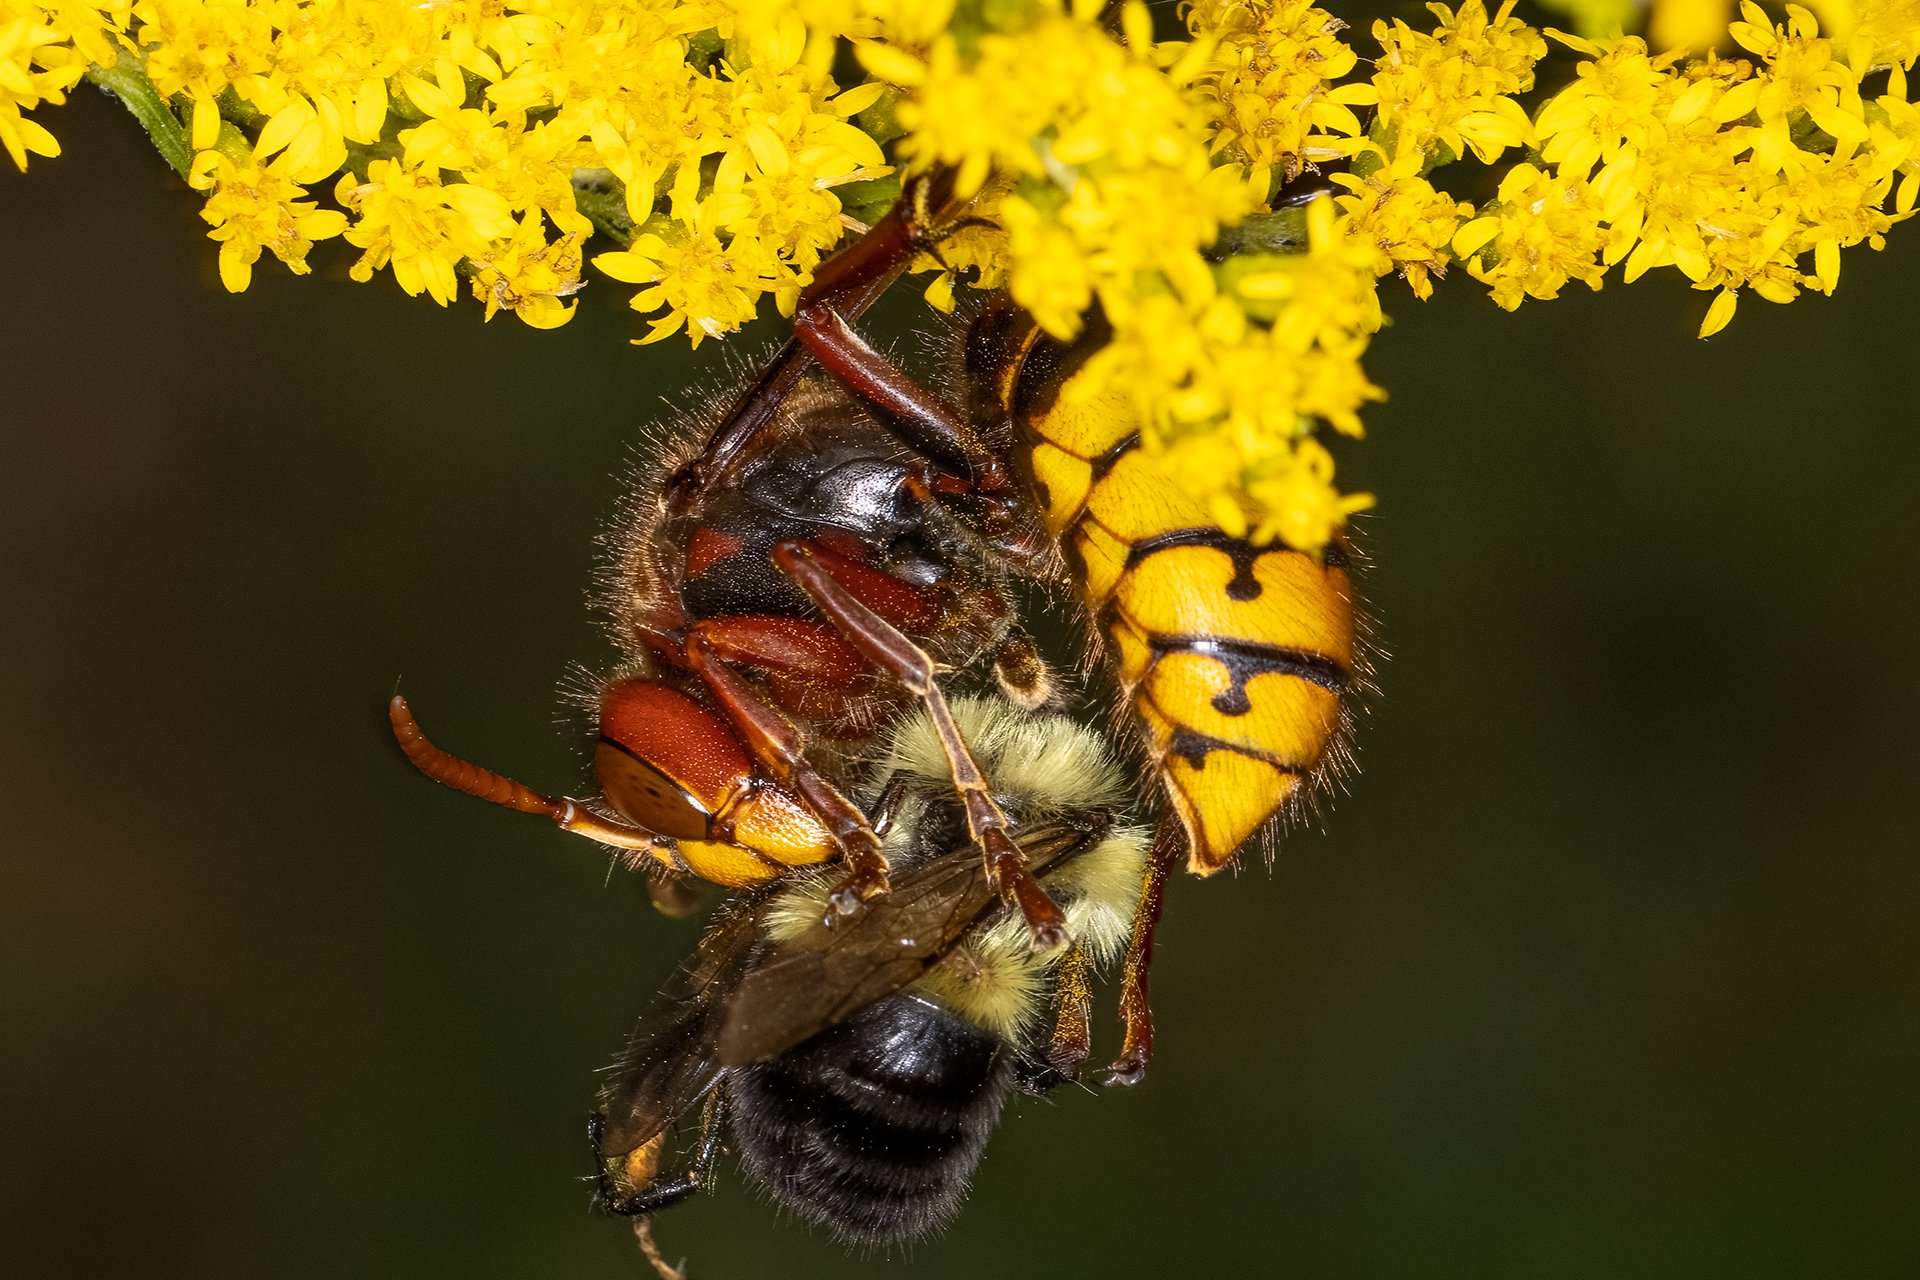 European Hornet attacking a bee